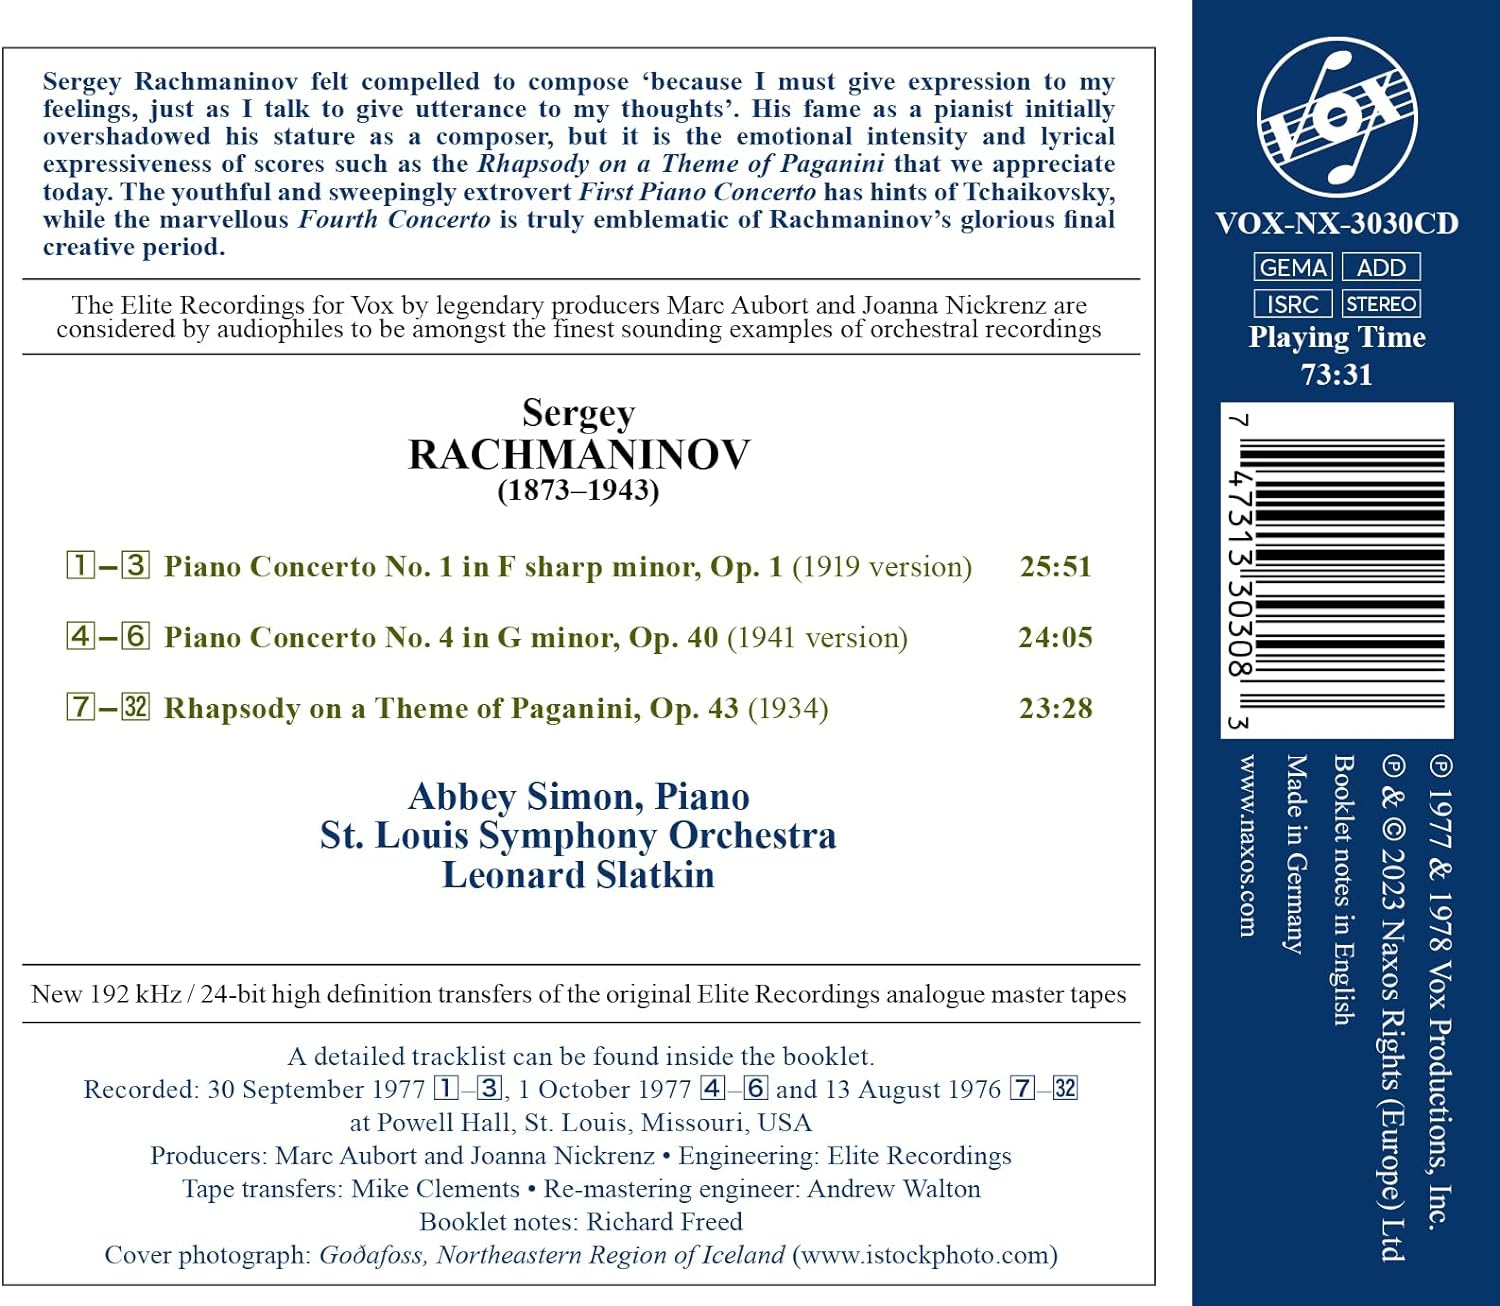 Abbey Simon 라흐마니노프: 피아노 협주곡 1, 4번, 파가니니 광시곡 (Rachmaninov: Piano Concertos Nos. 1 & 4, Rhapsody on a Theme of Paganini)